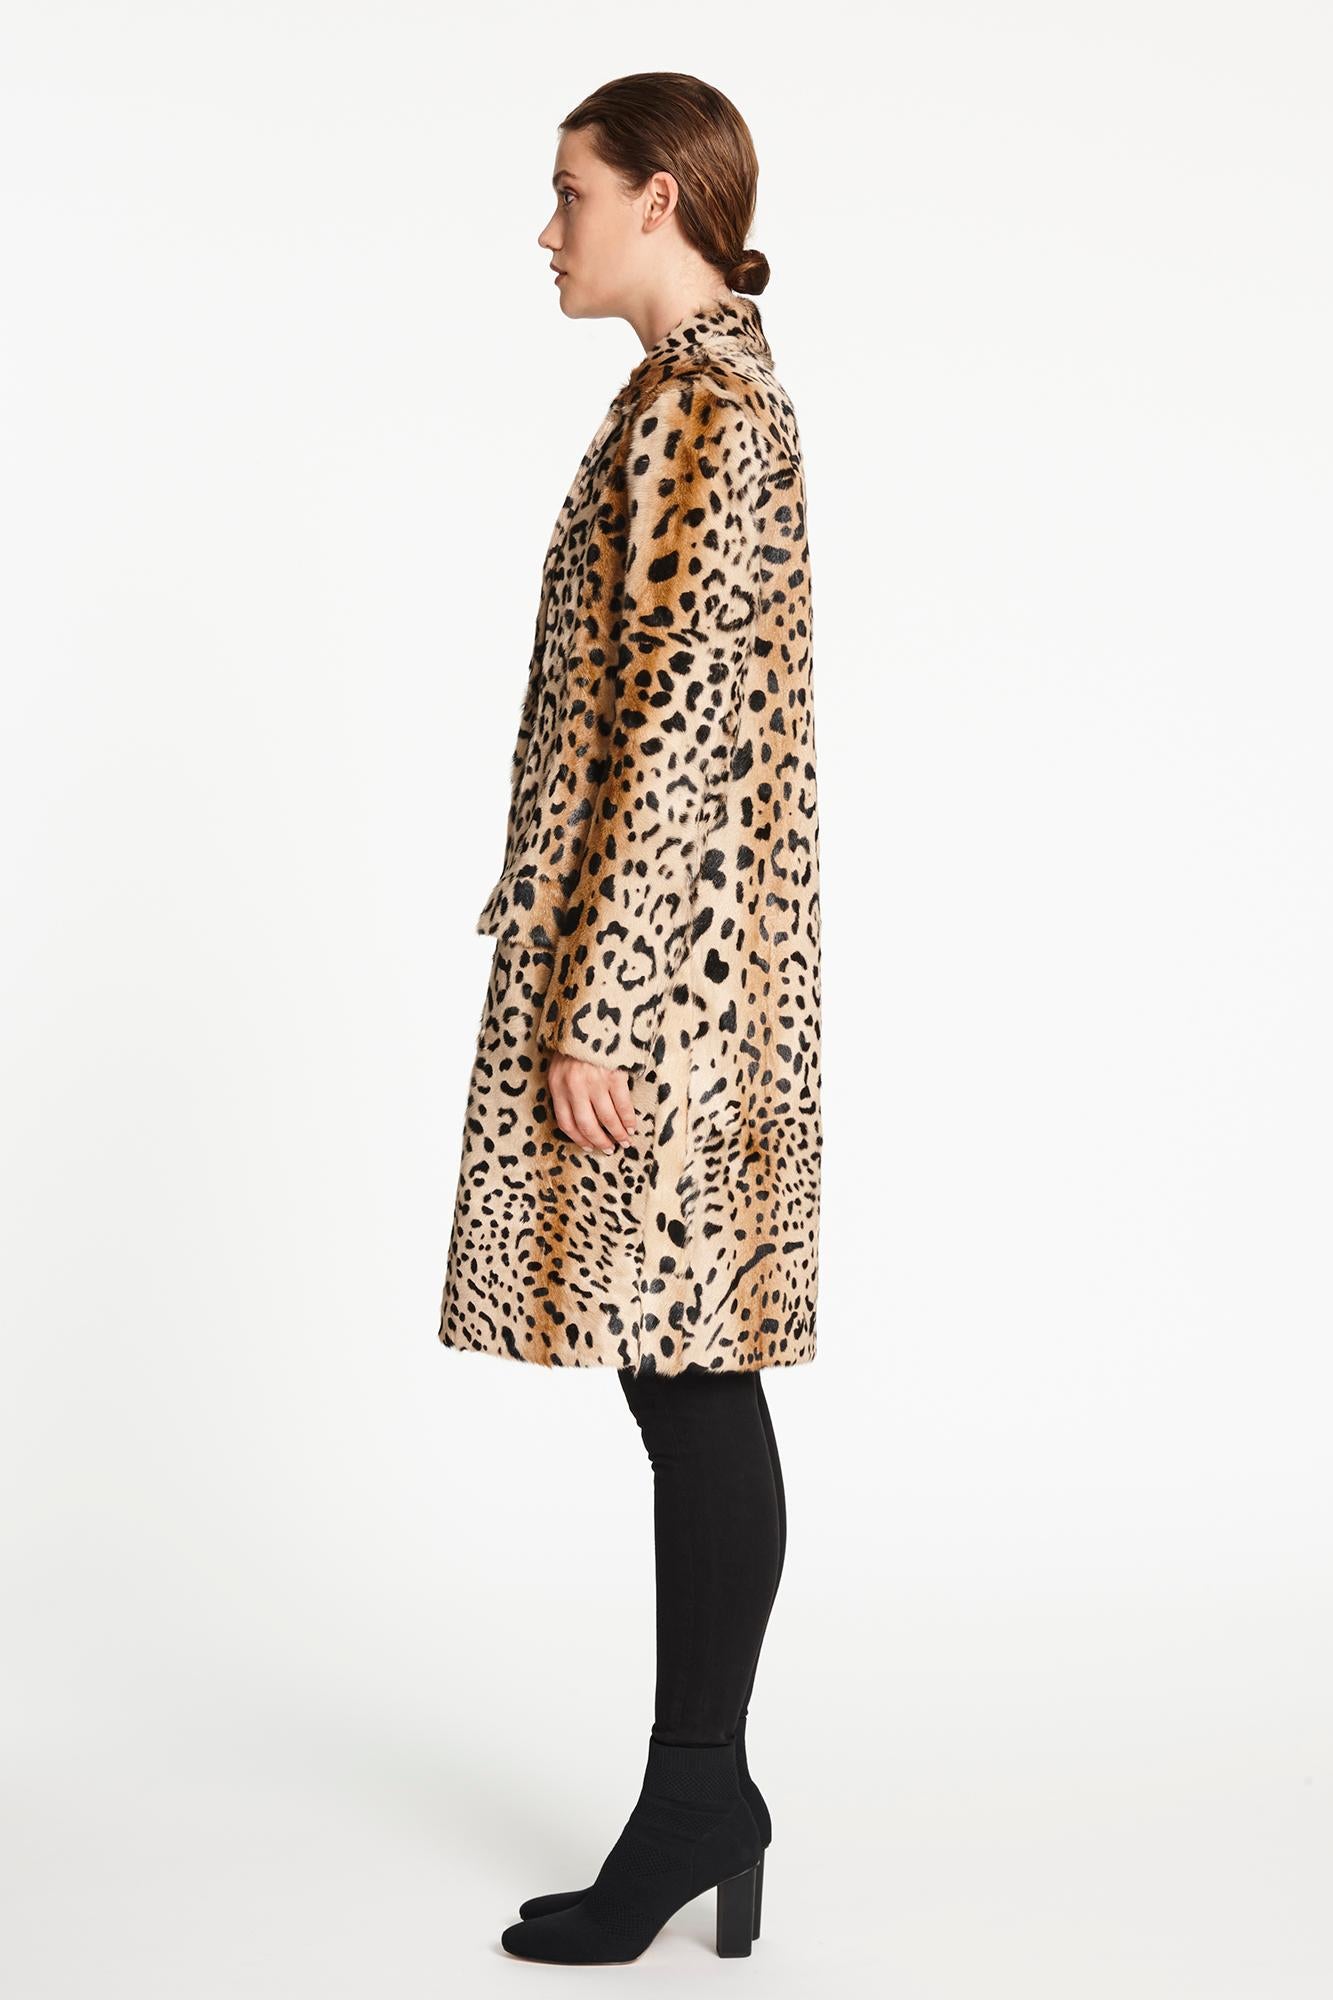 Verheyen London Leopard Print Coat in Natural Goat Hair Fur Size 8-10 3